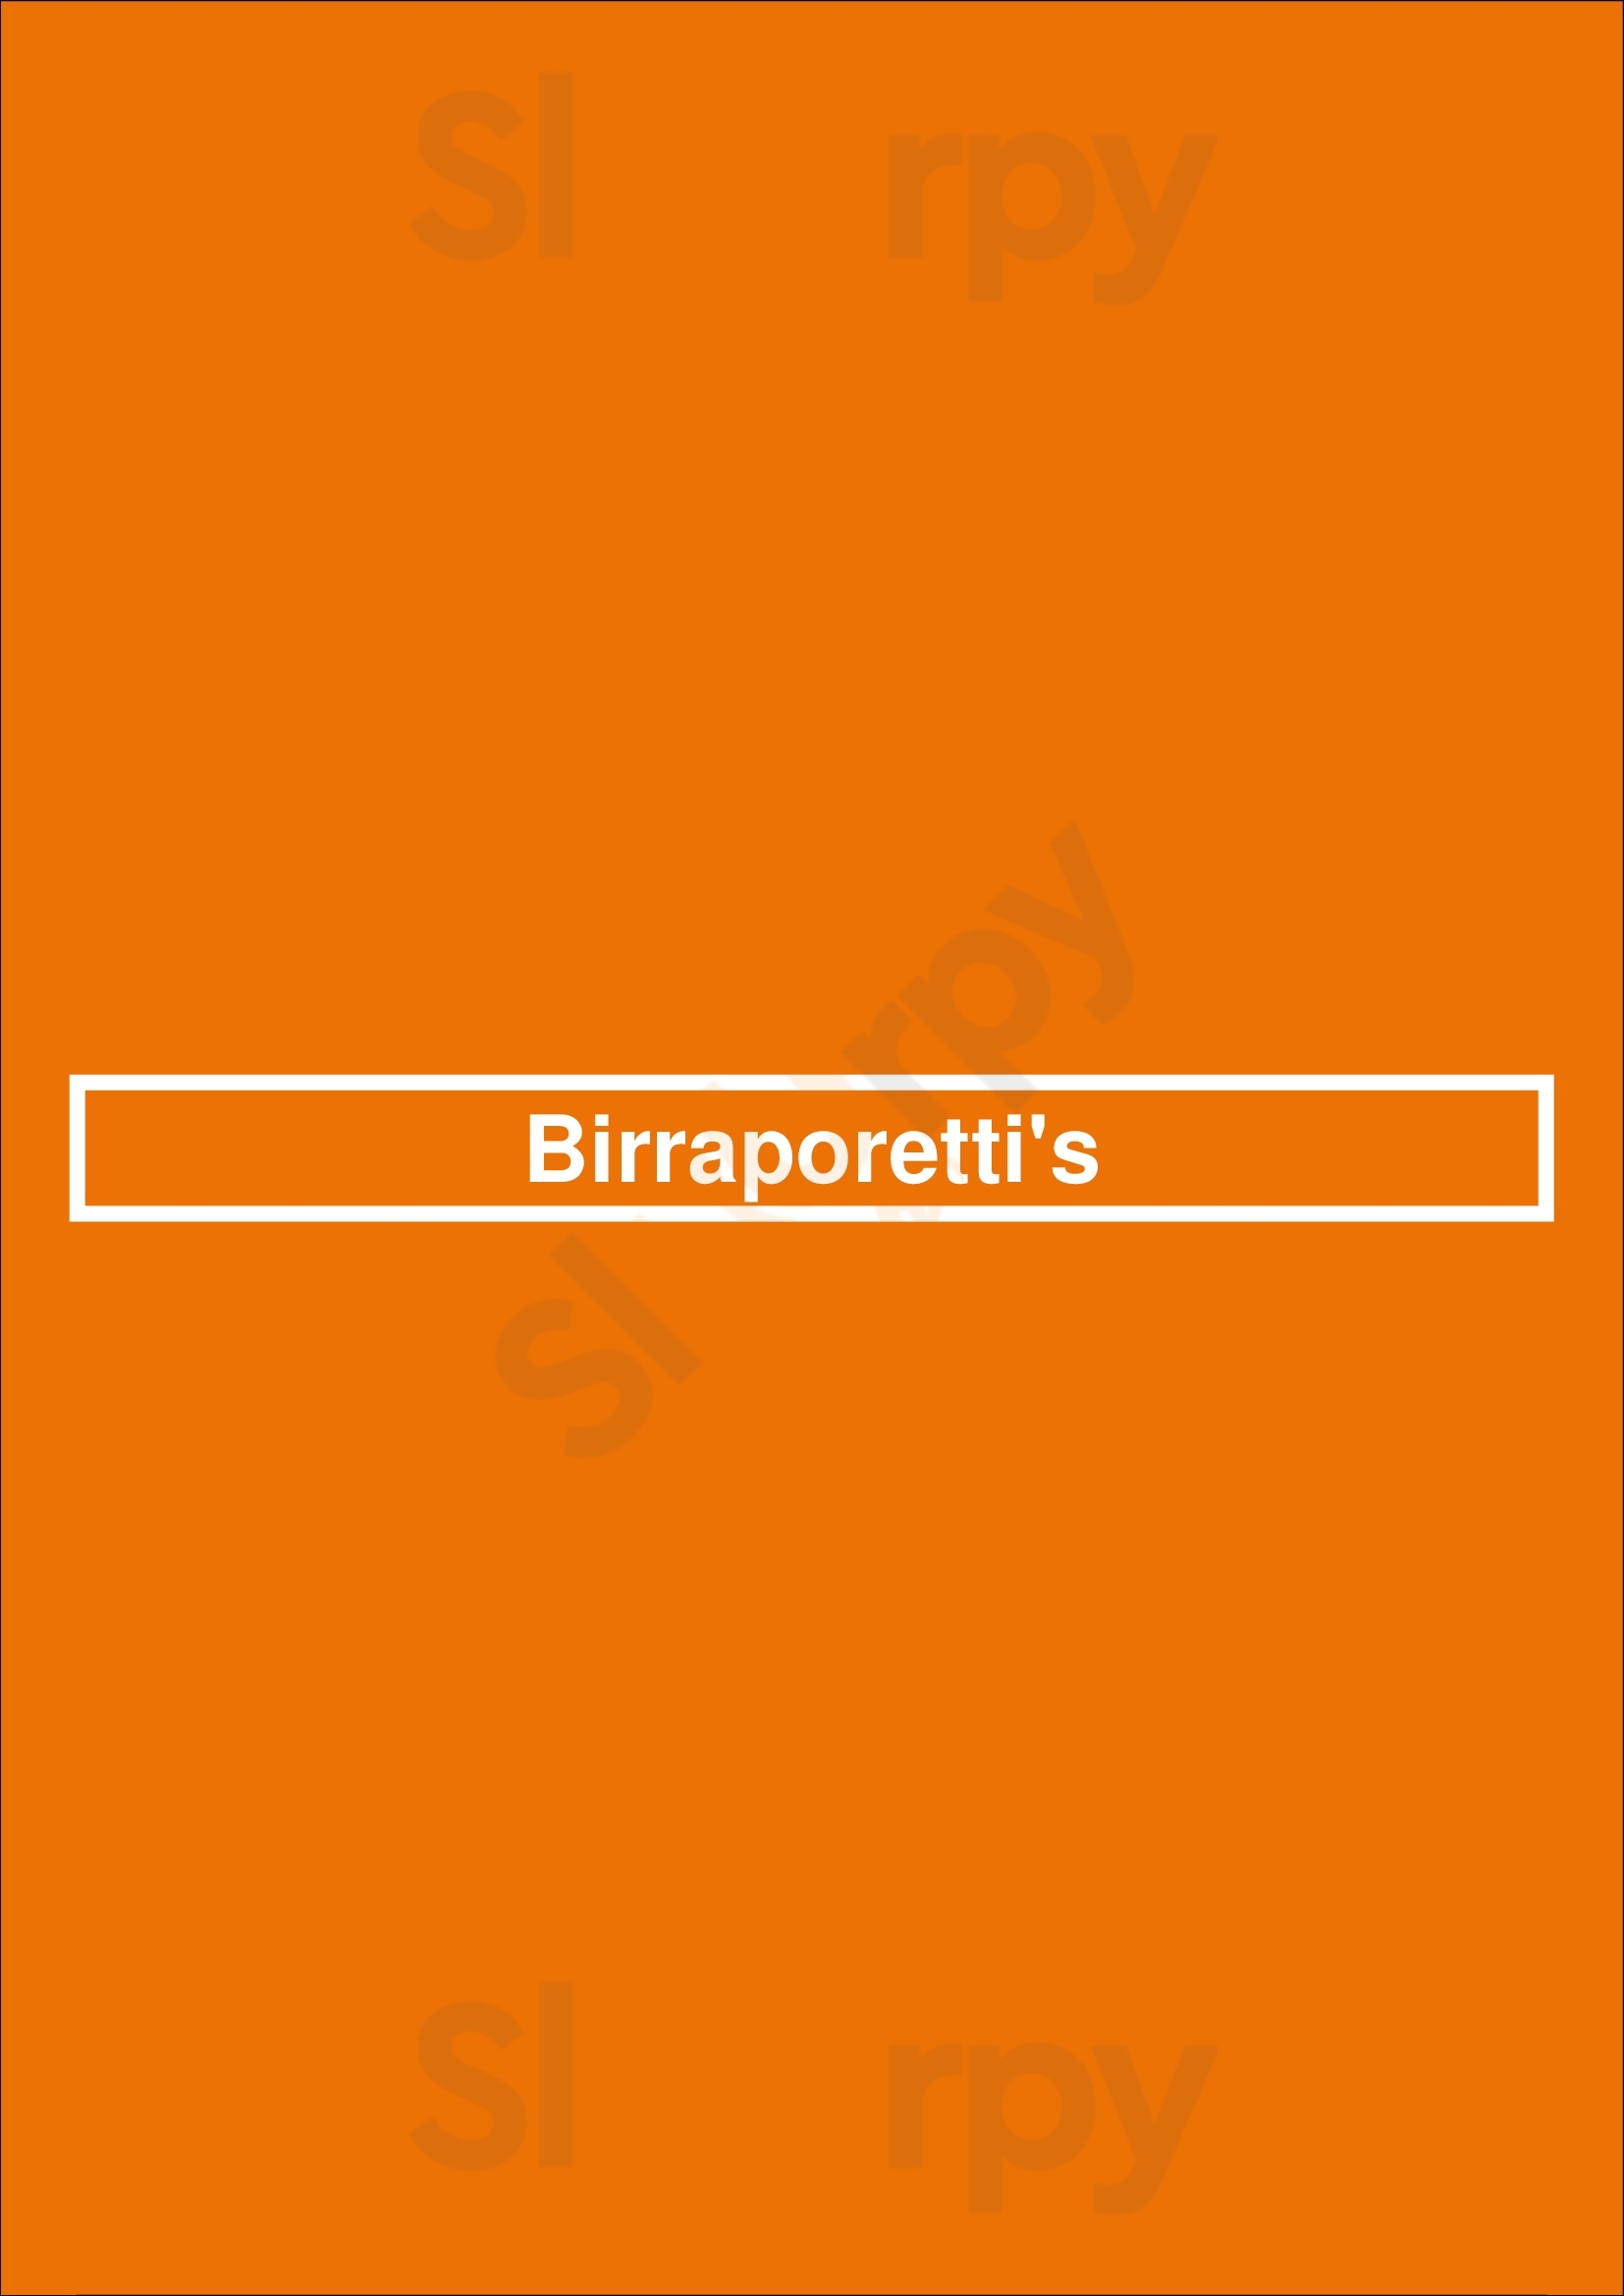 Birraporetti's Houston Menu - 1